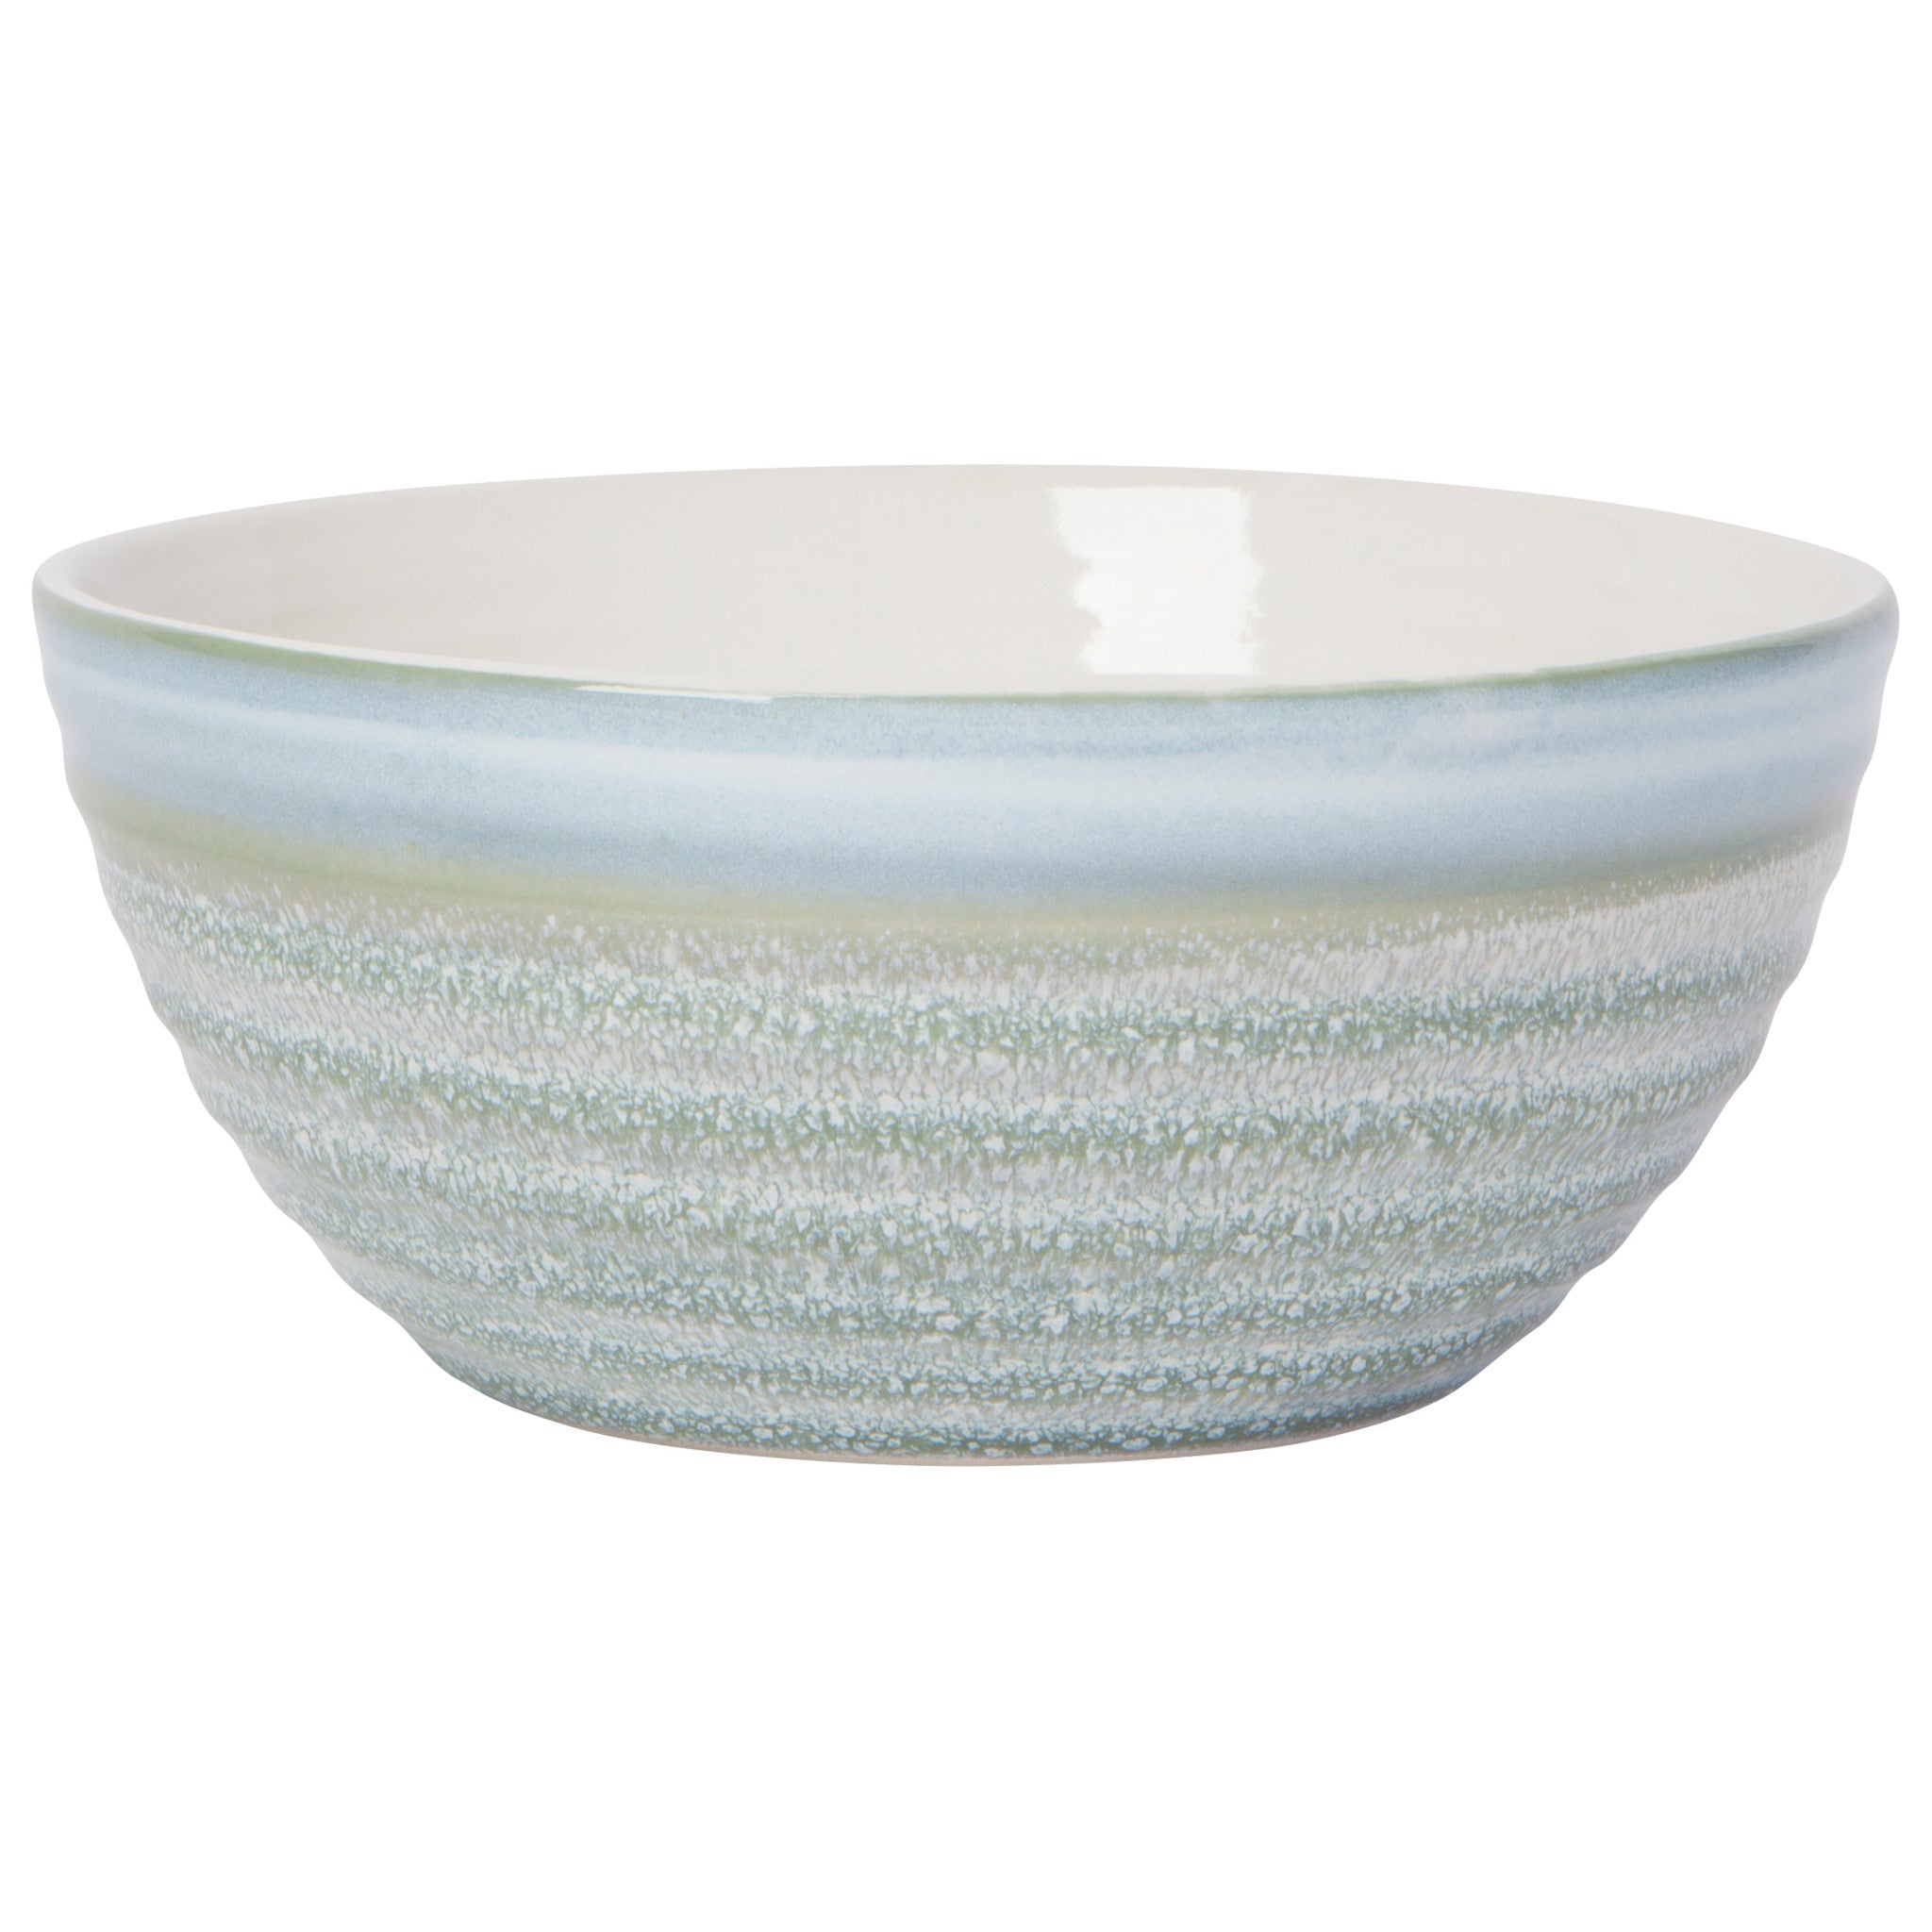 Bowl - Stoneware Reactive Glaze